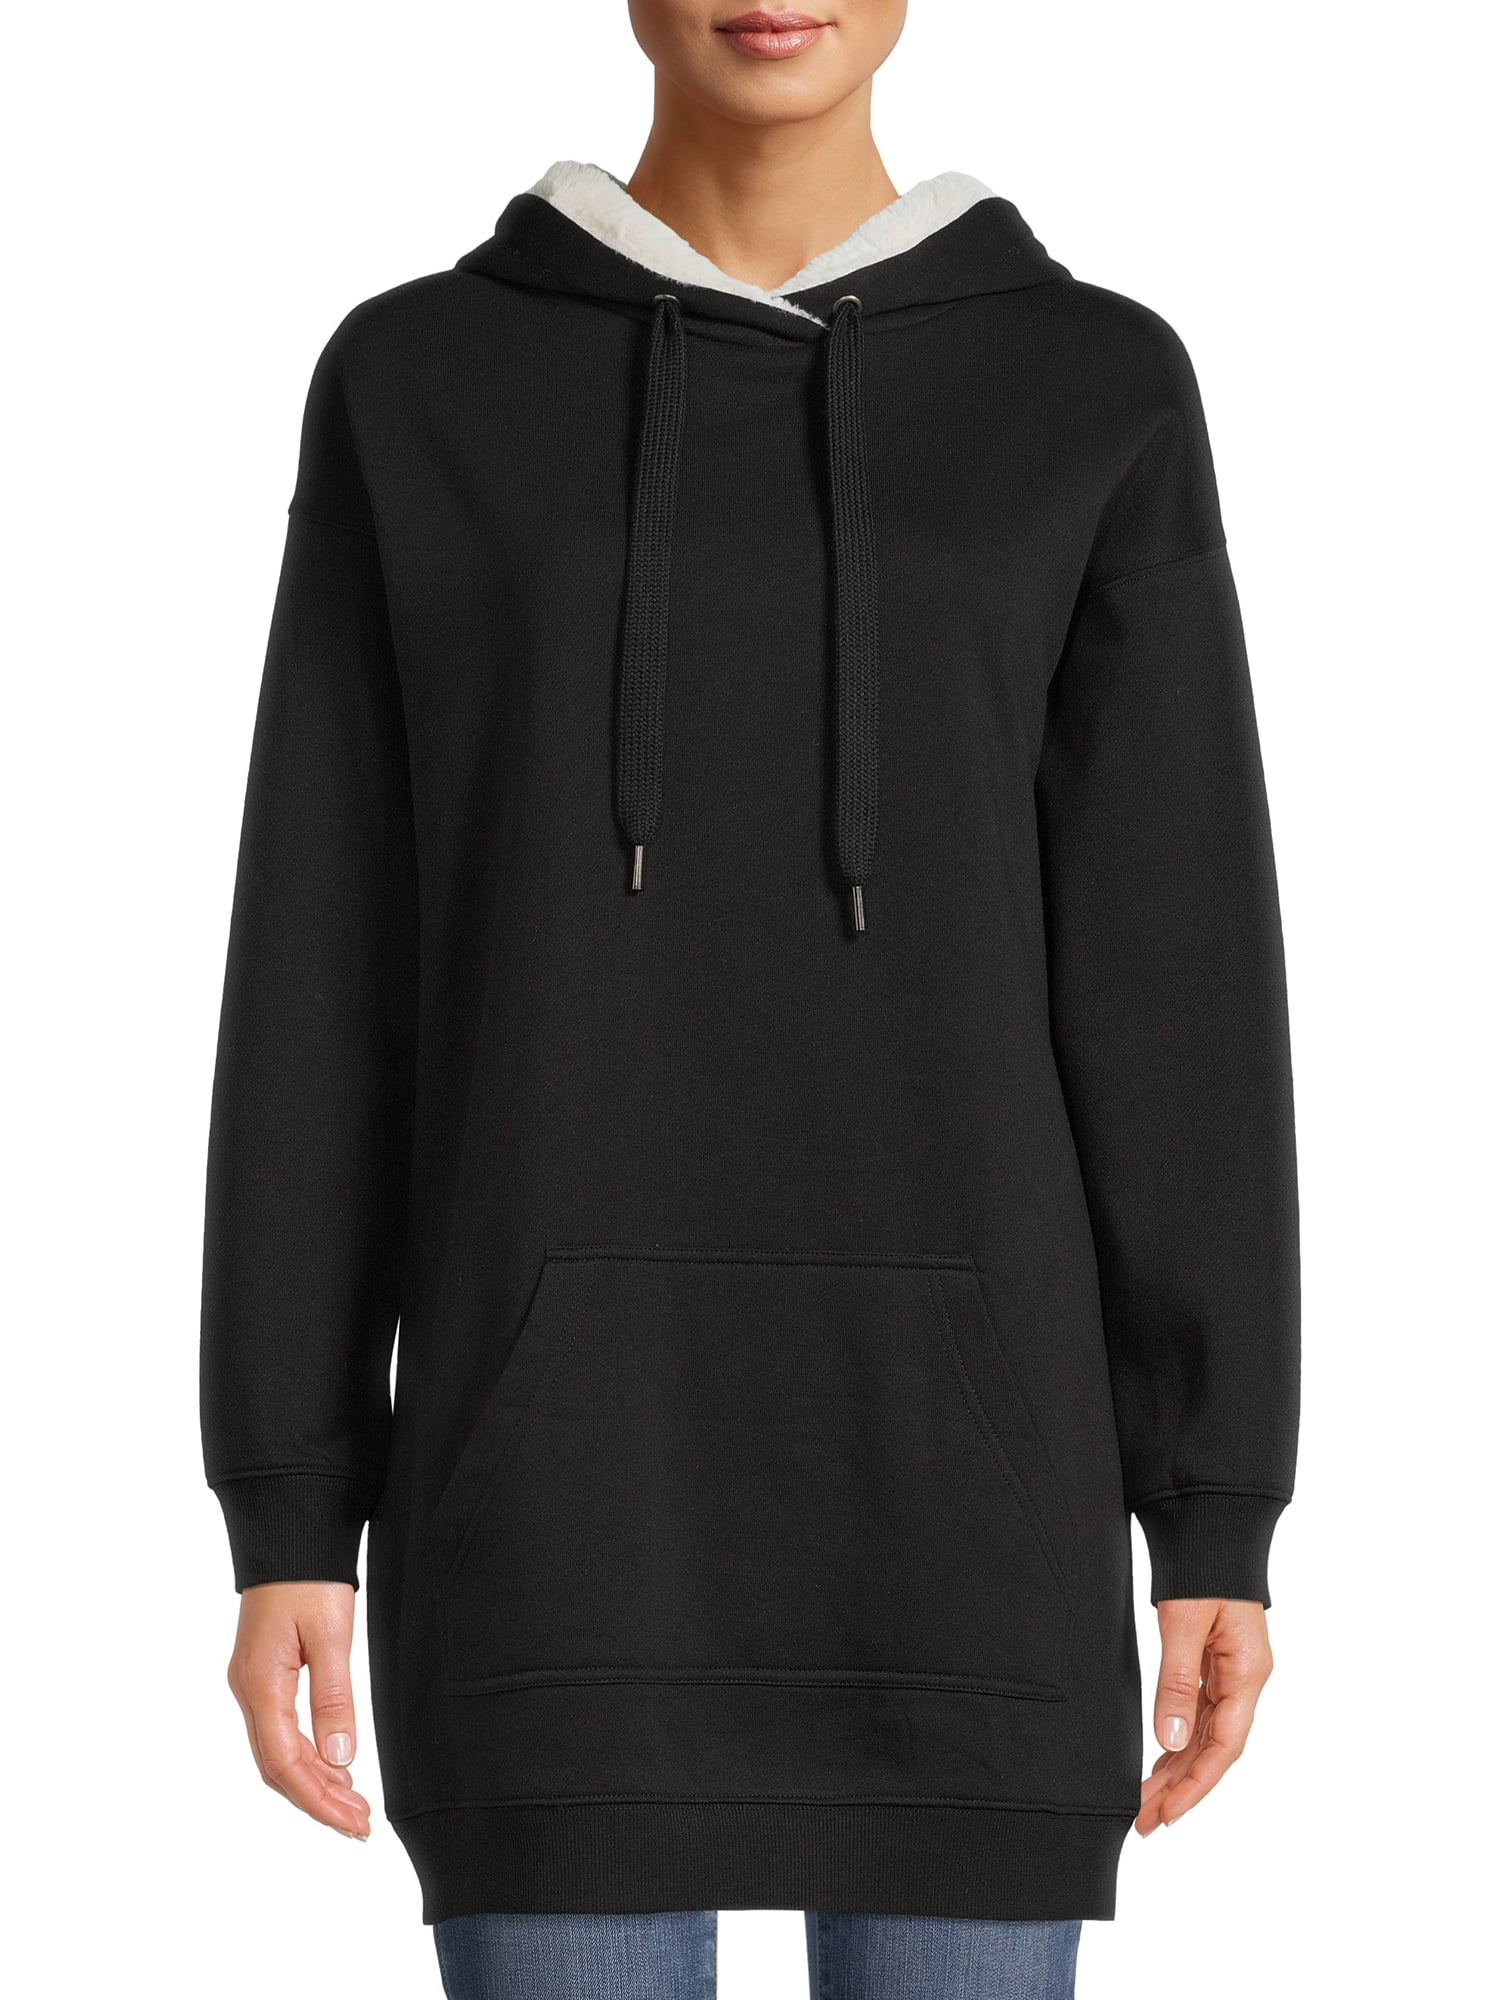 windbreaker black hooded long sleeve Details about   No boundaries womens juniors size M 7-9 